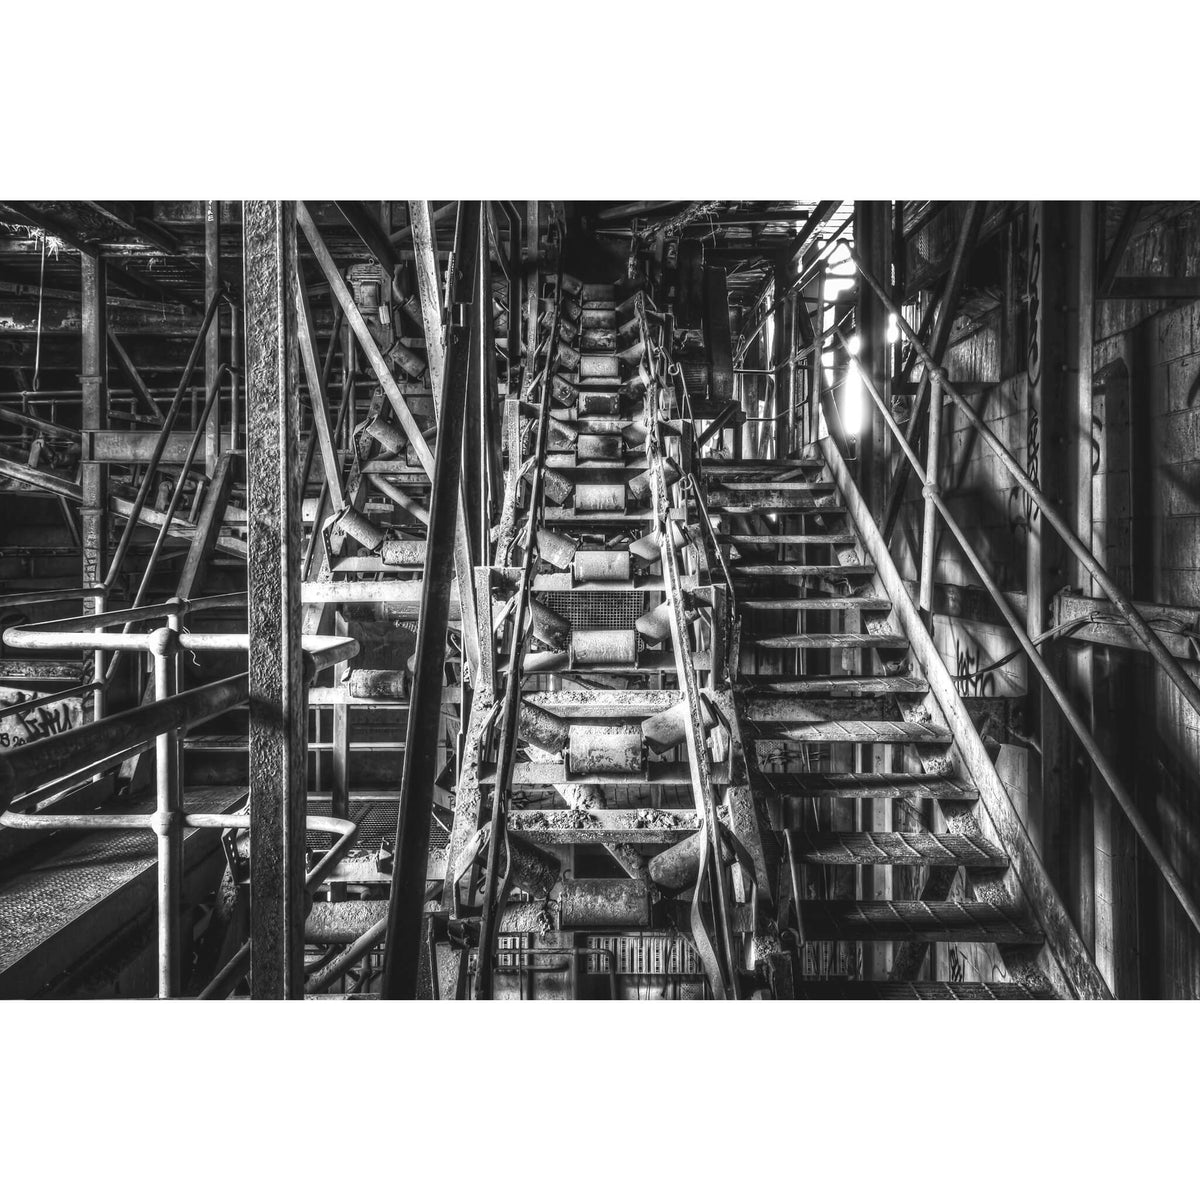 Main Conveyor | Hornsby Quarry Fine Art Print - Lost Collective Shop